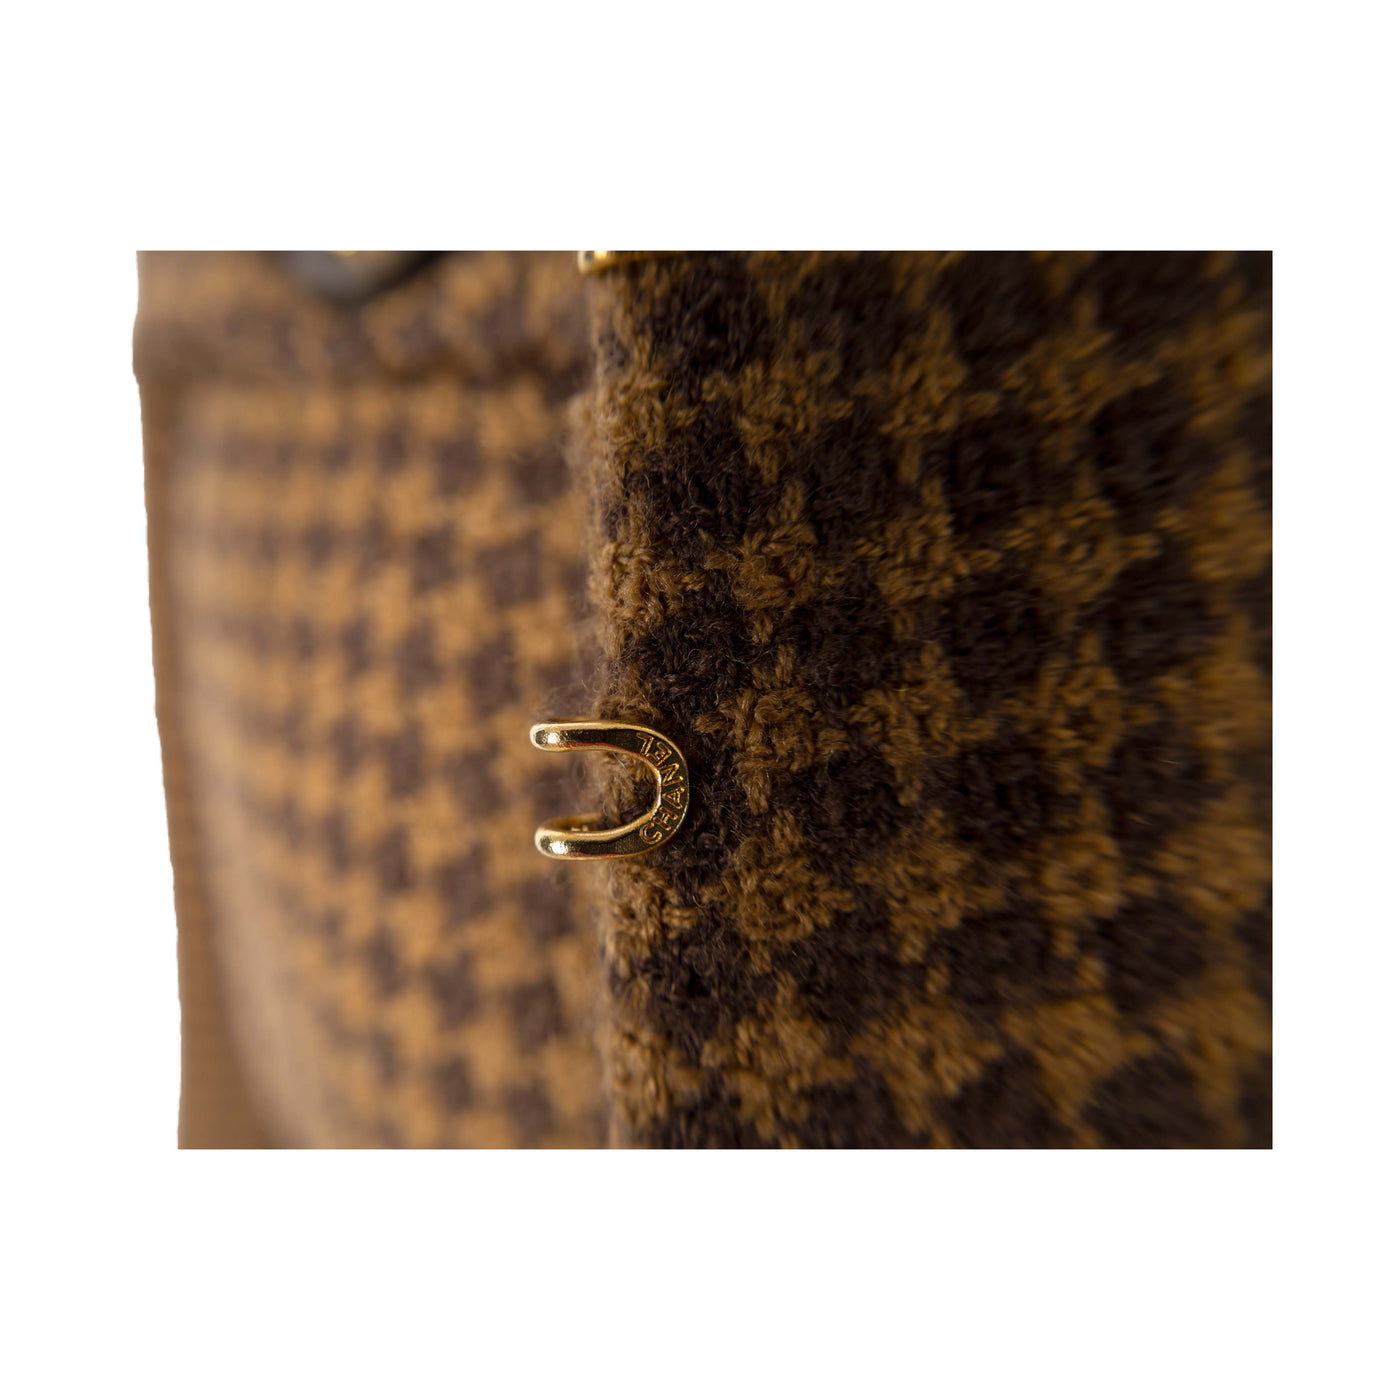 Secondhand Chanel Brown Tweed Belted Jacket